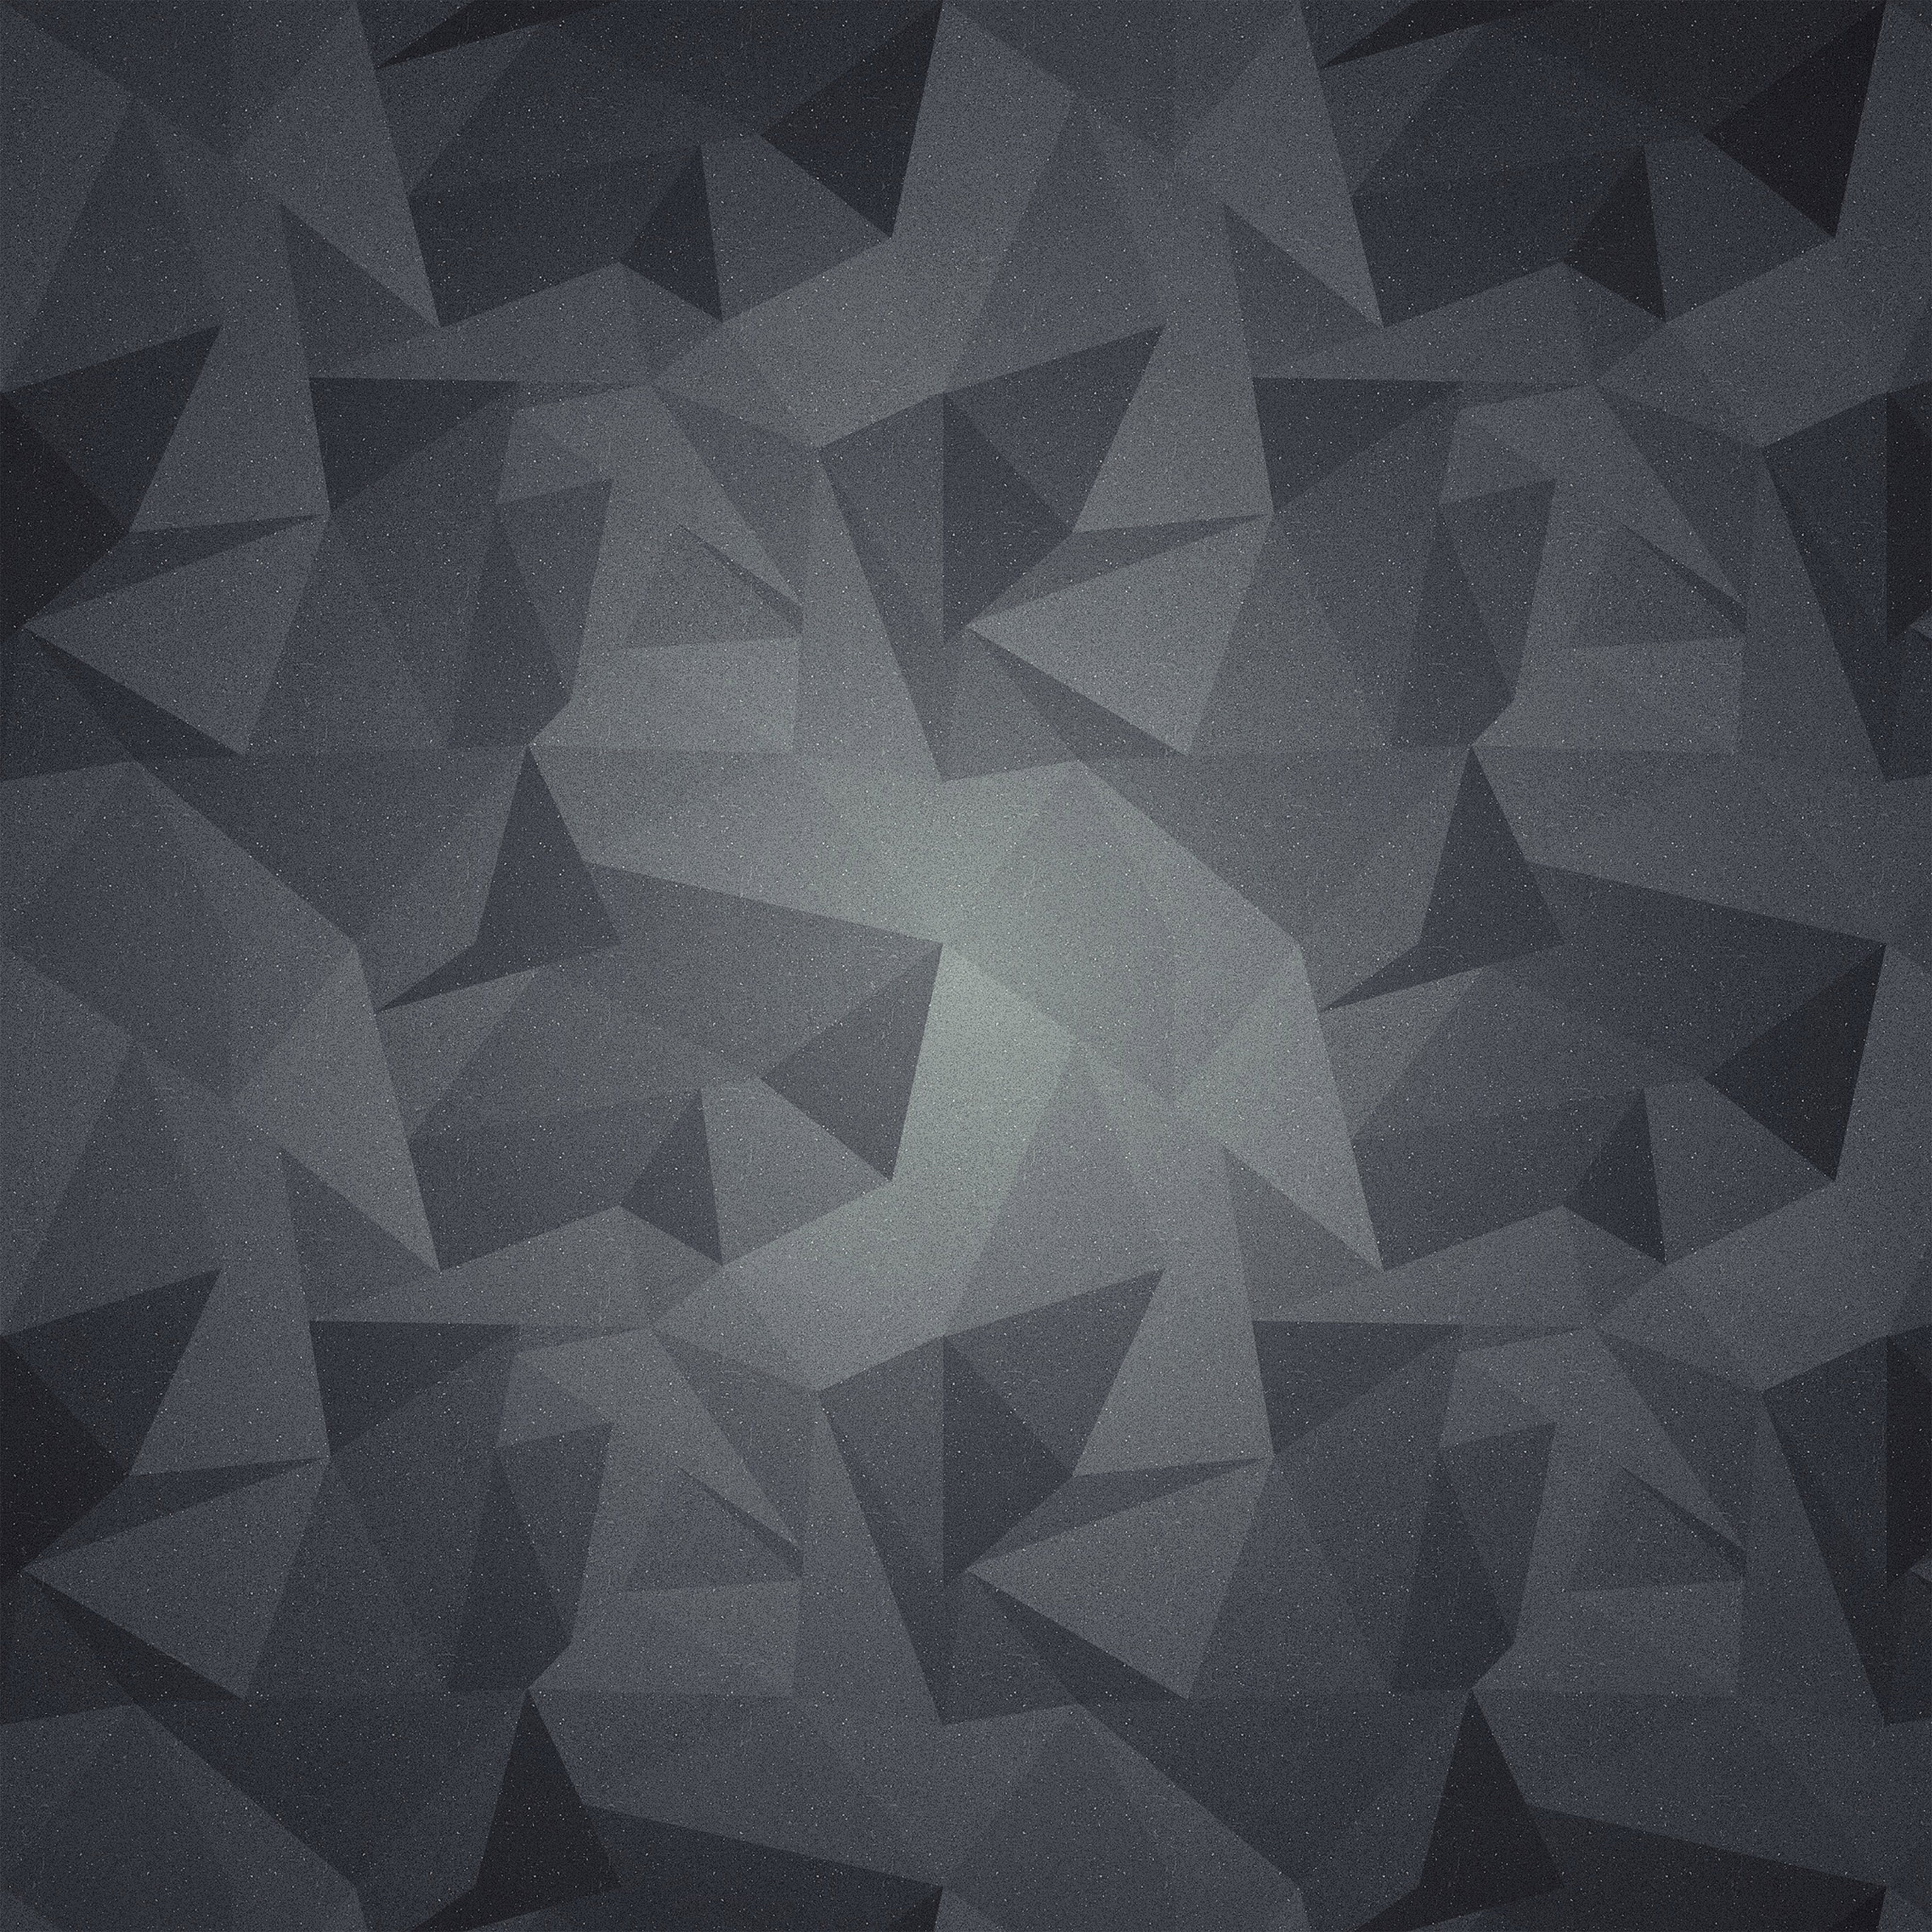 geometric pattern wallpaper,black,pattern,triangle,monochrome,black and white